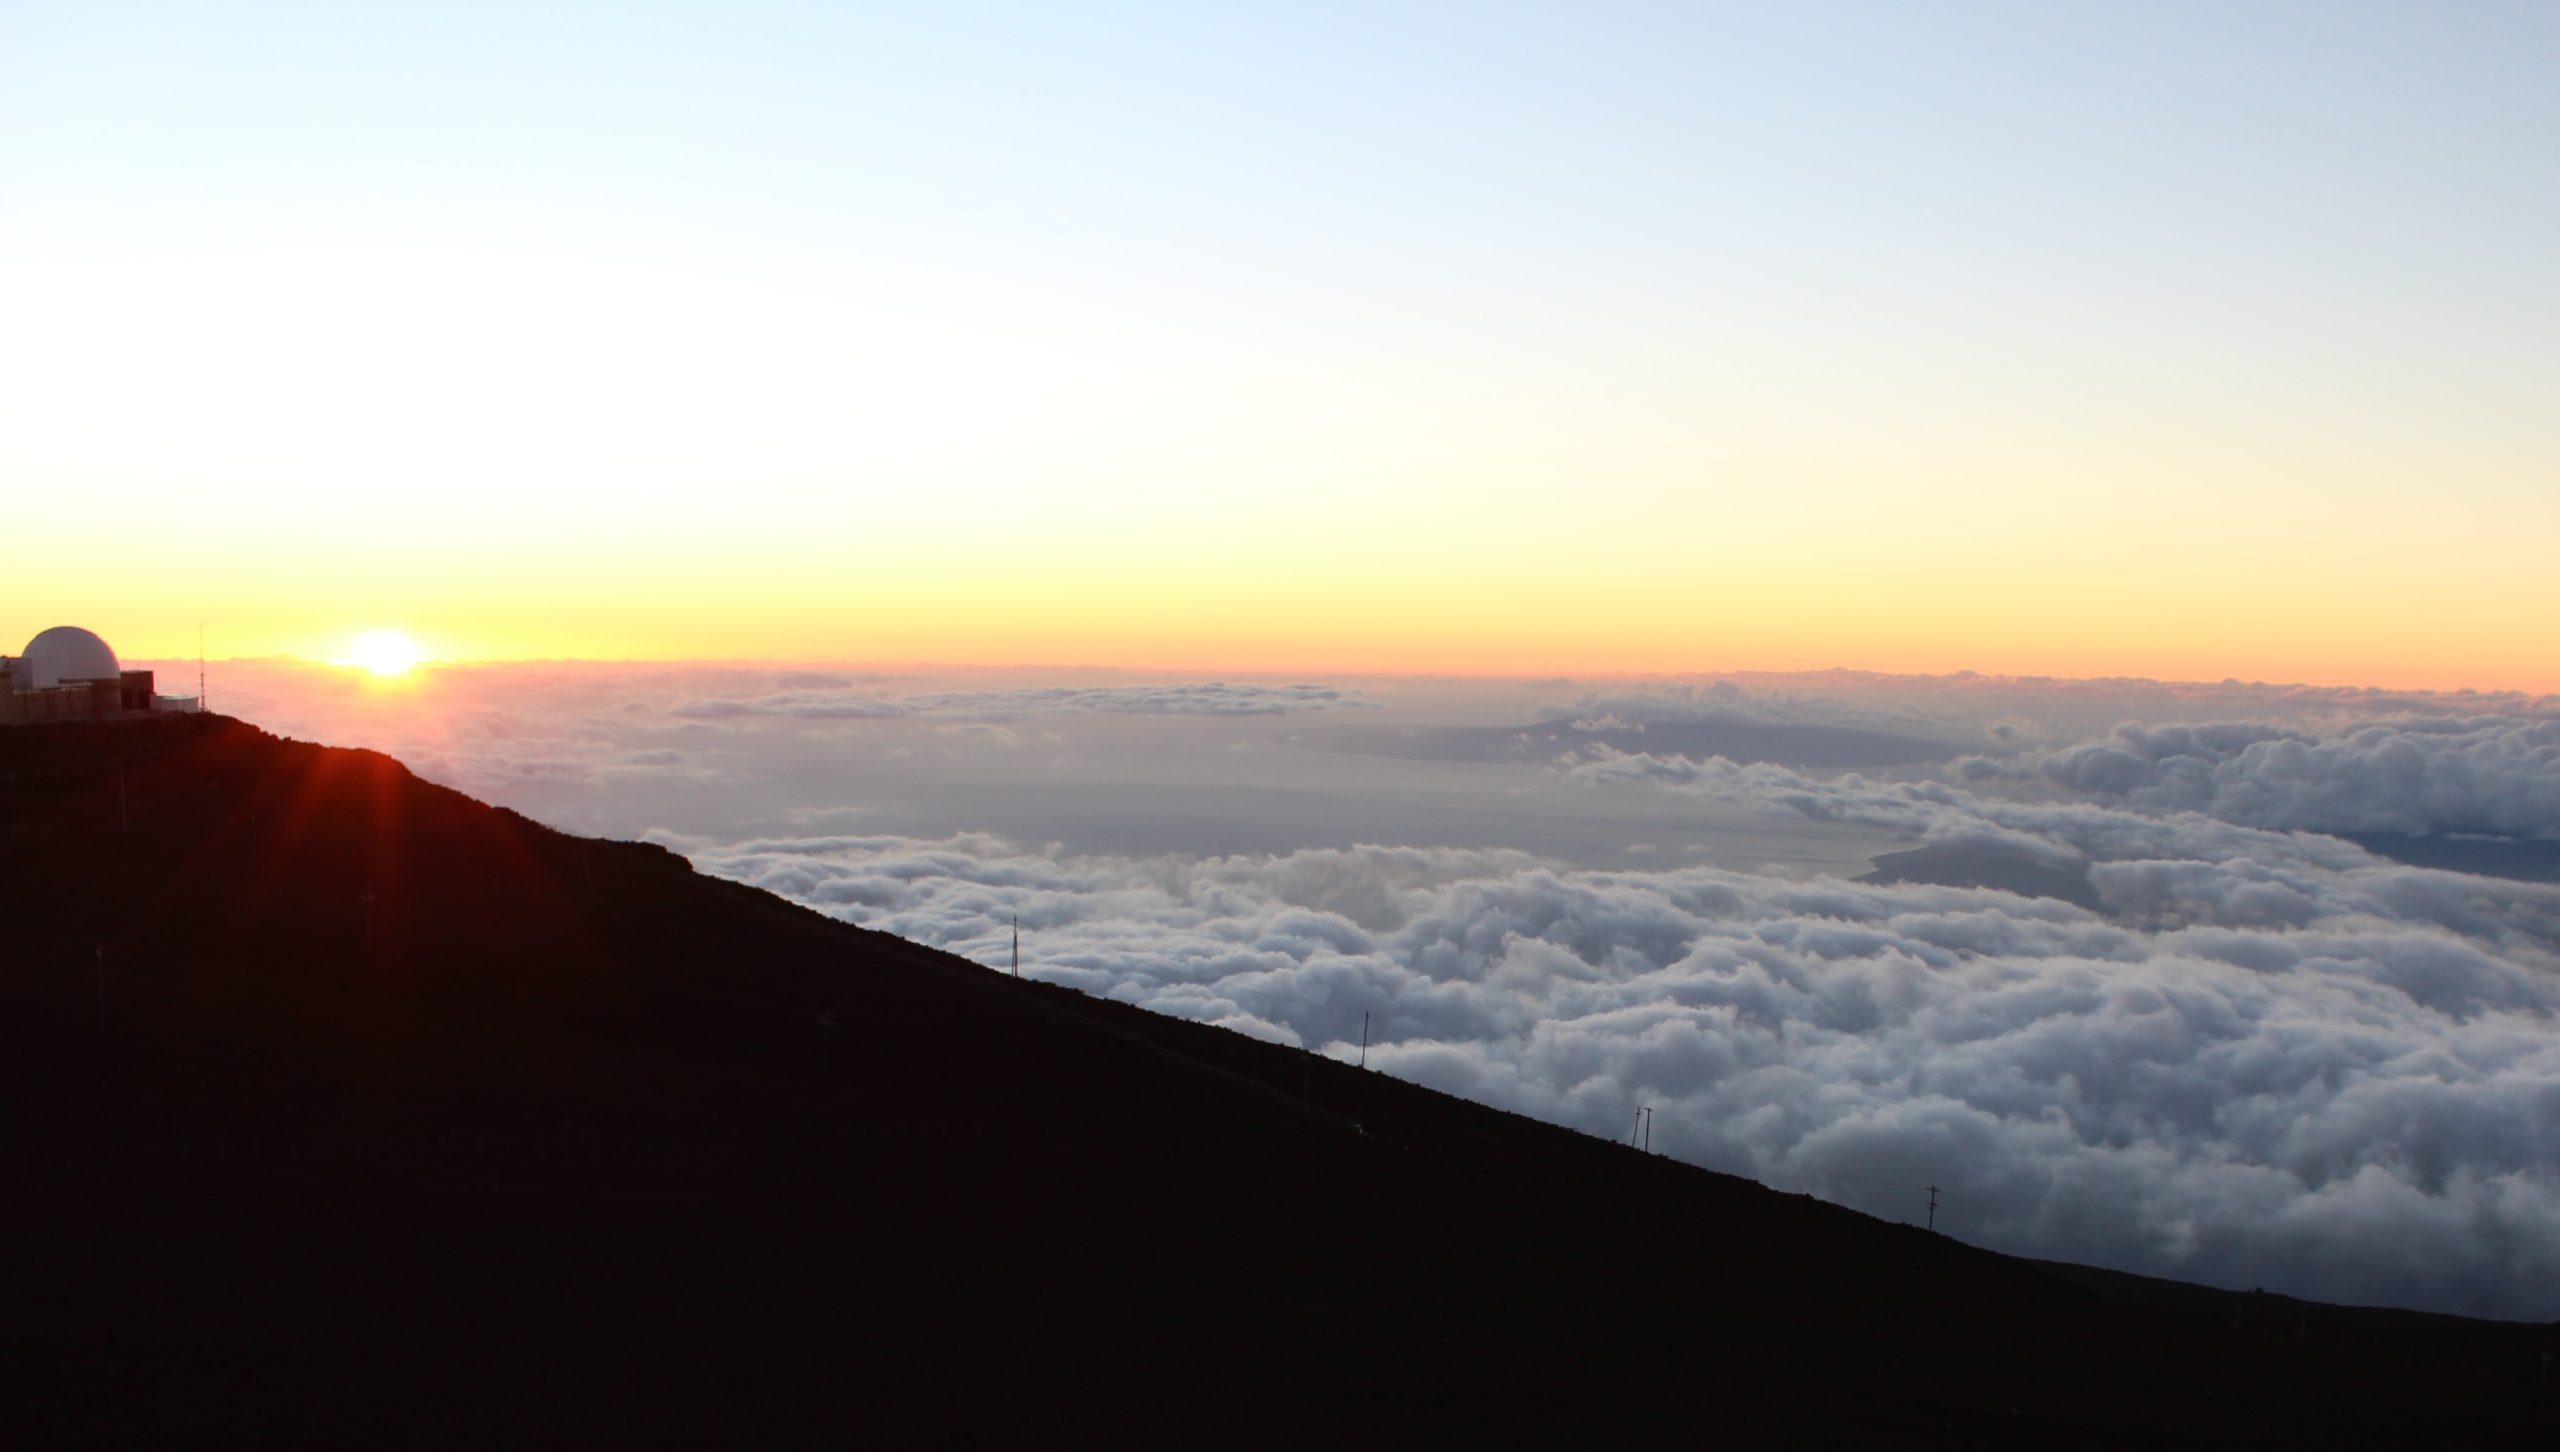 Maui Haleakala Astronomy stargazing